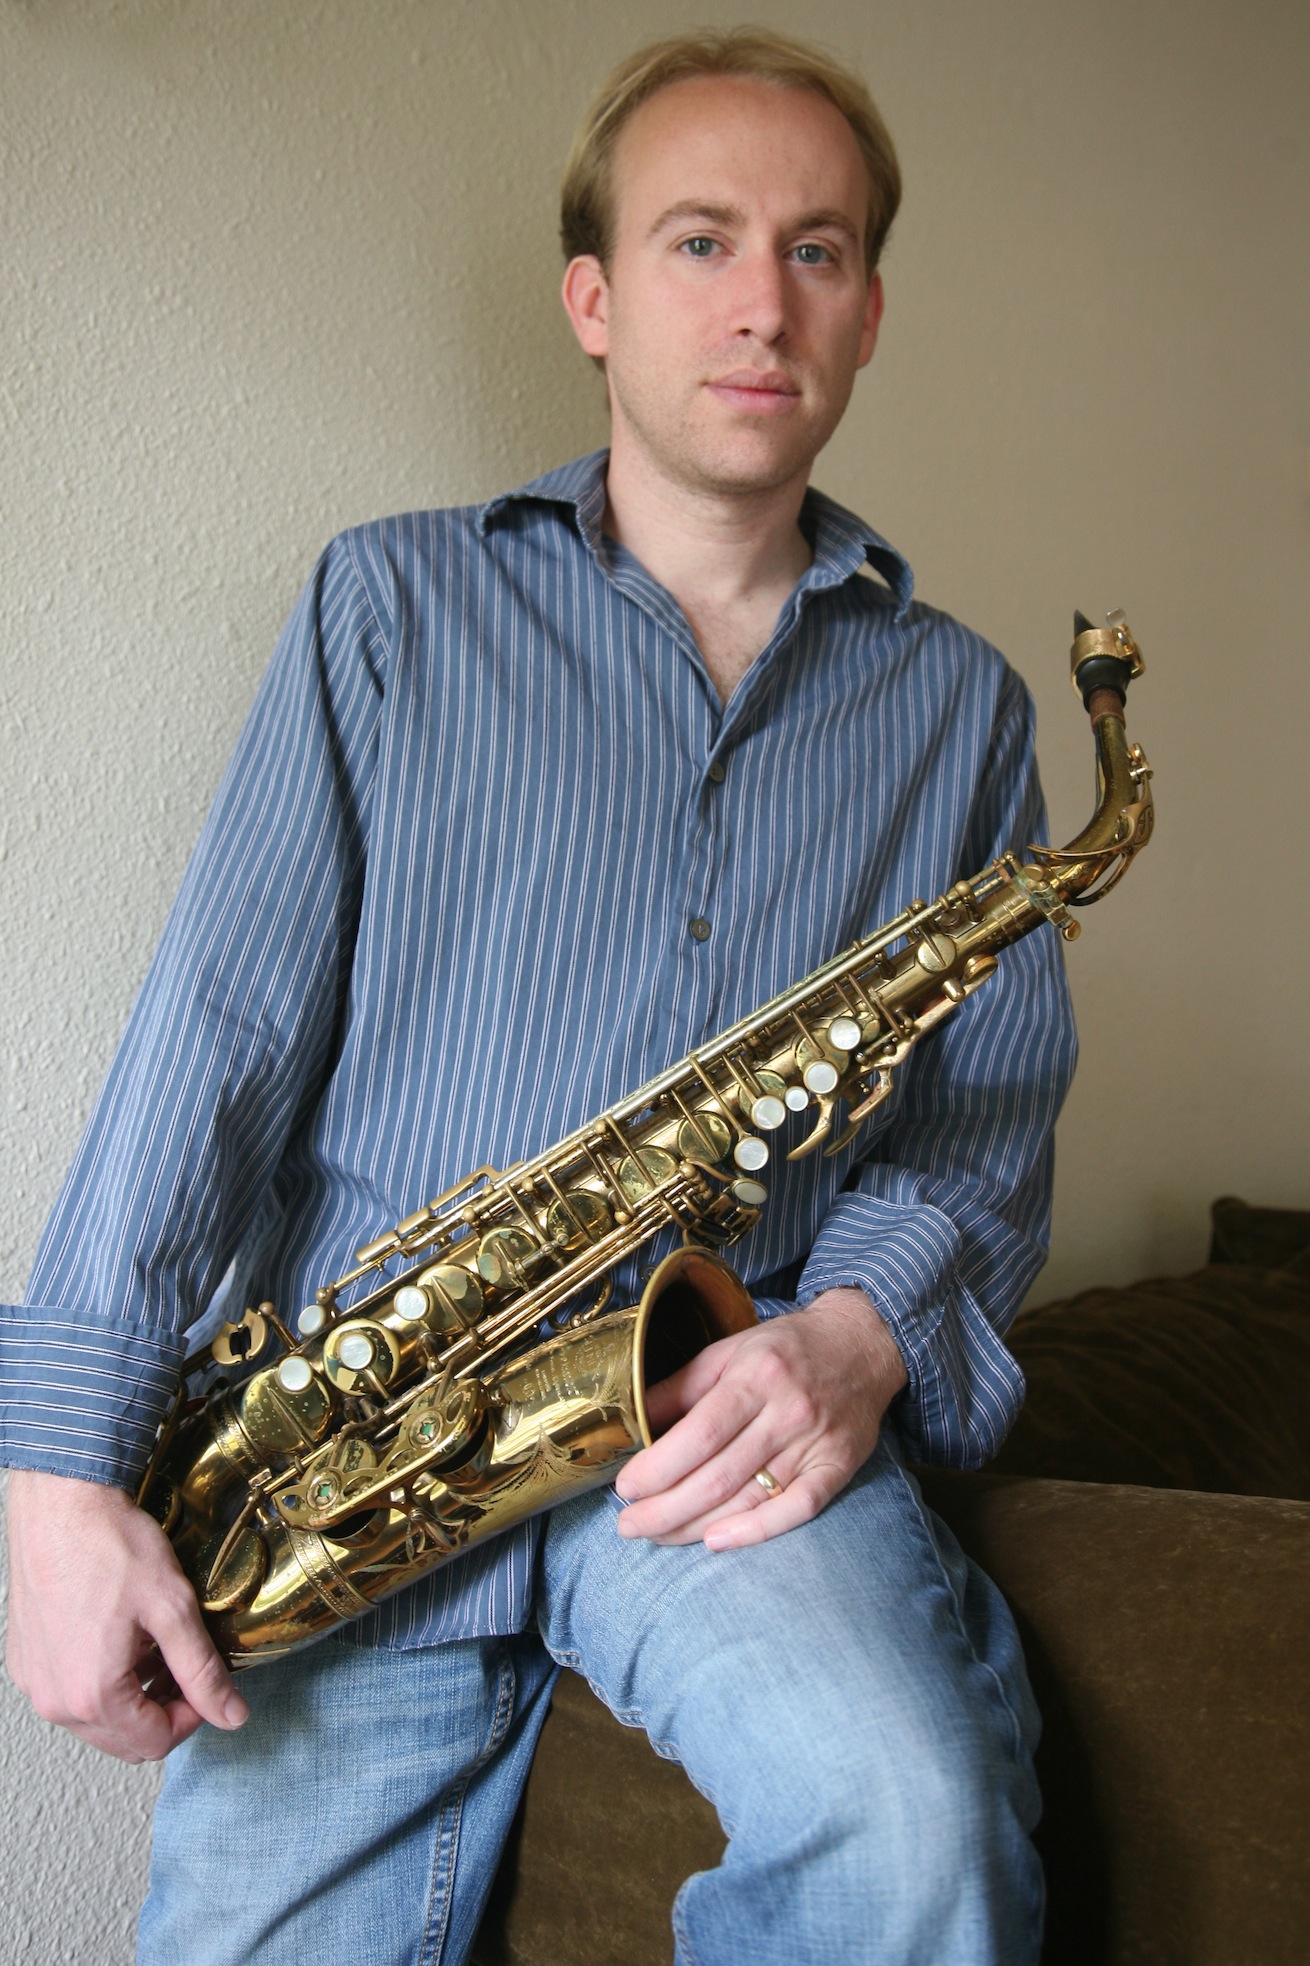 Jason Goldman with his saxophone.